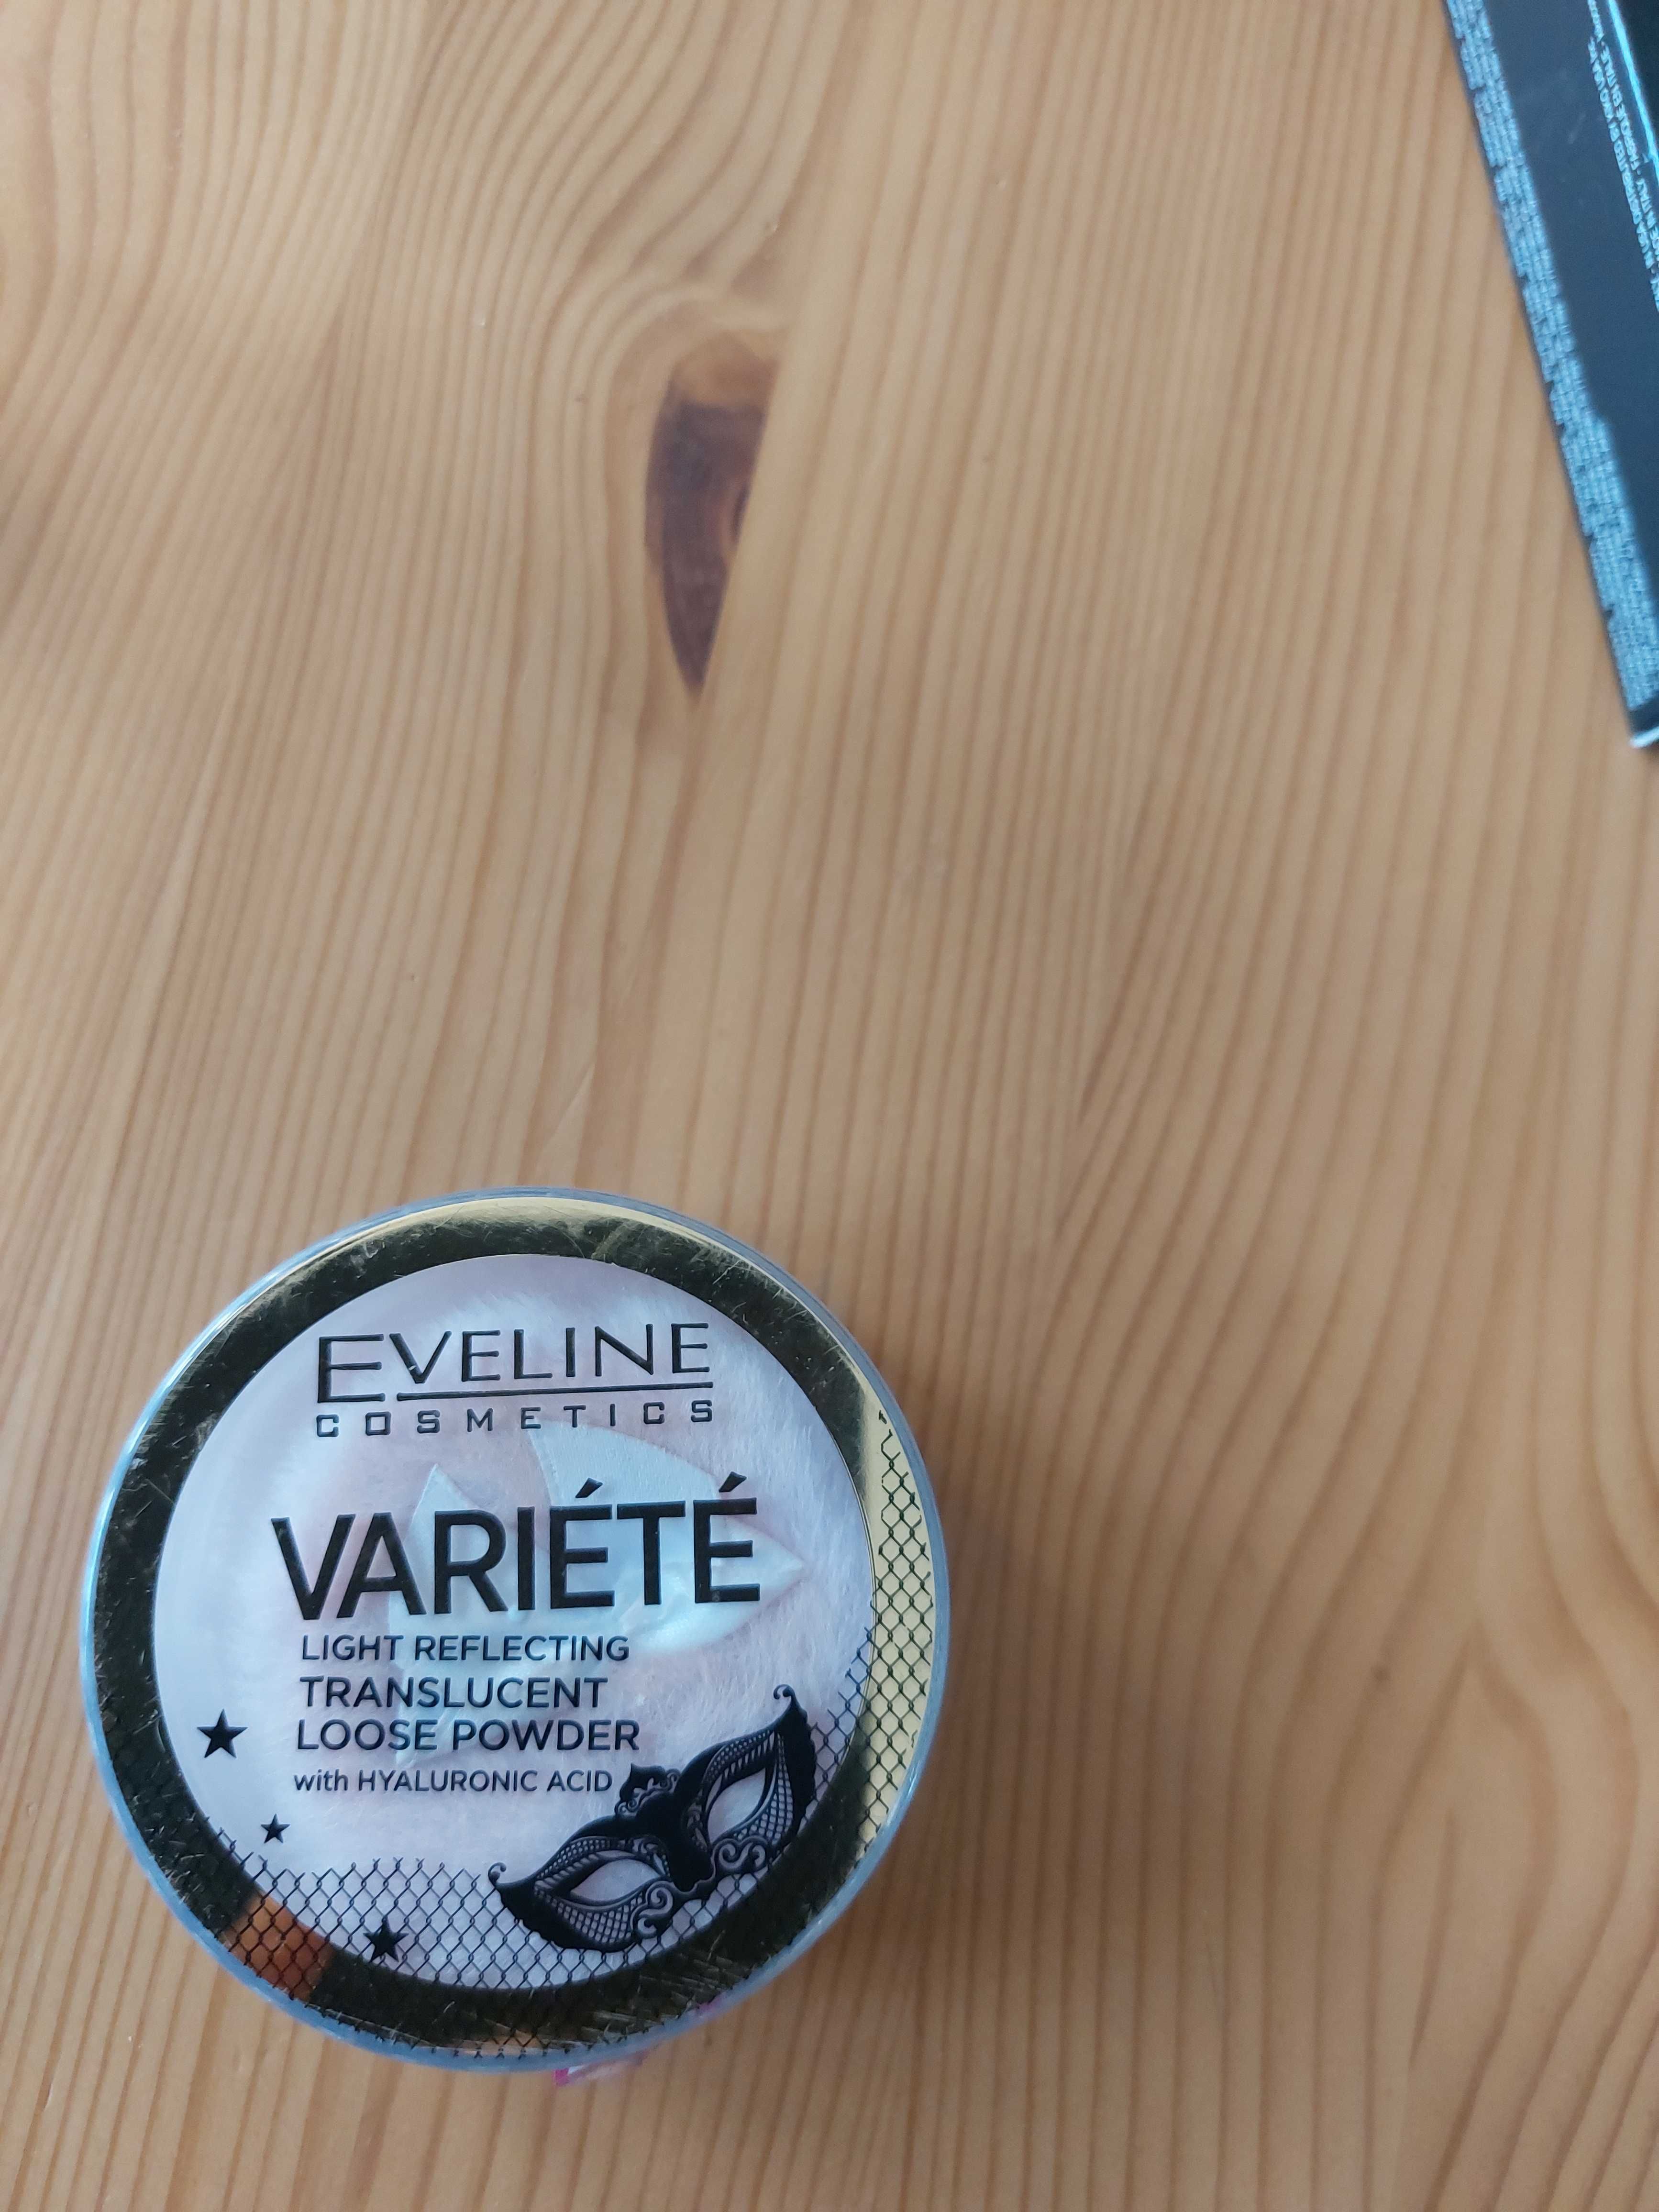 Variete translucent loose powder eveline